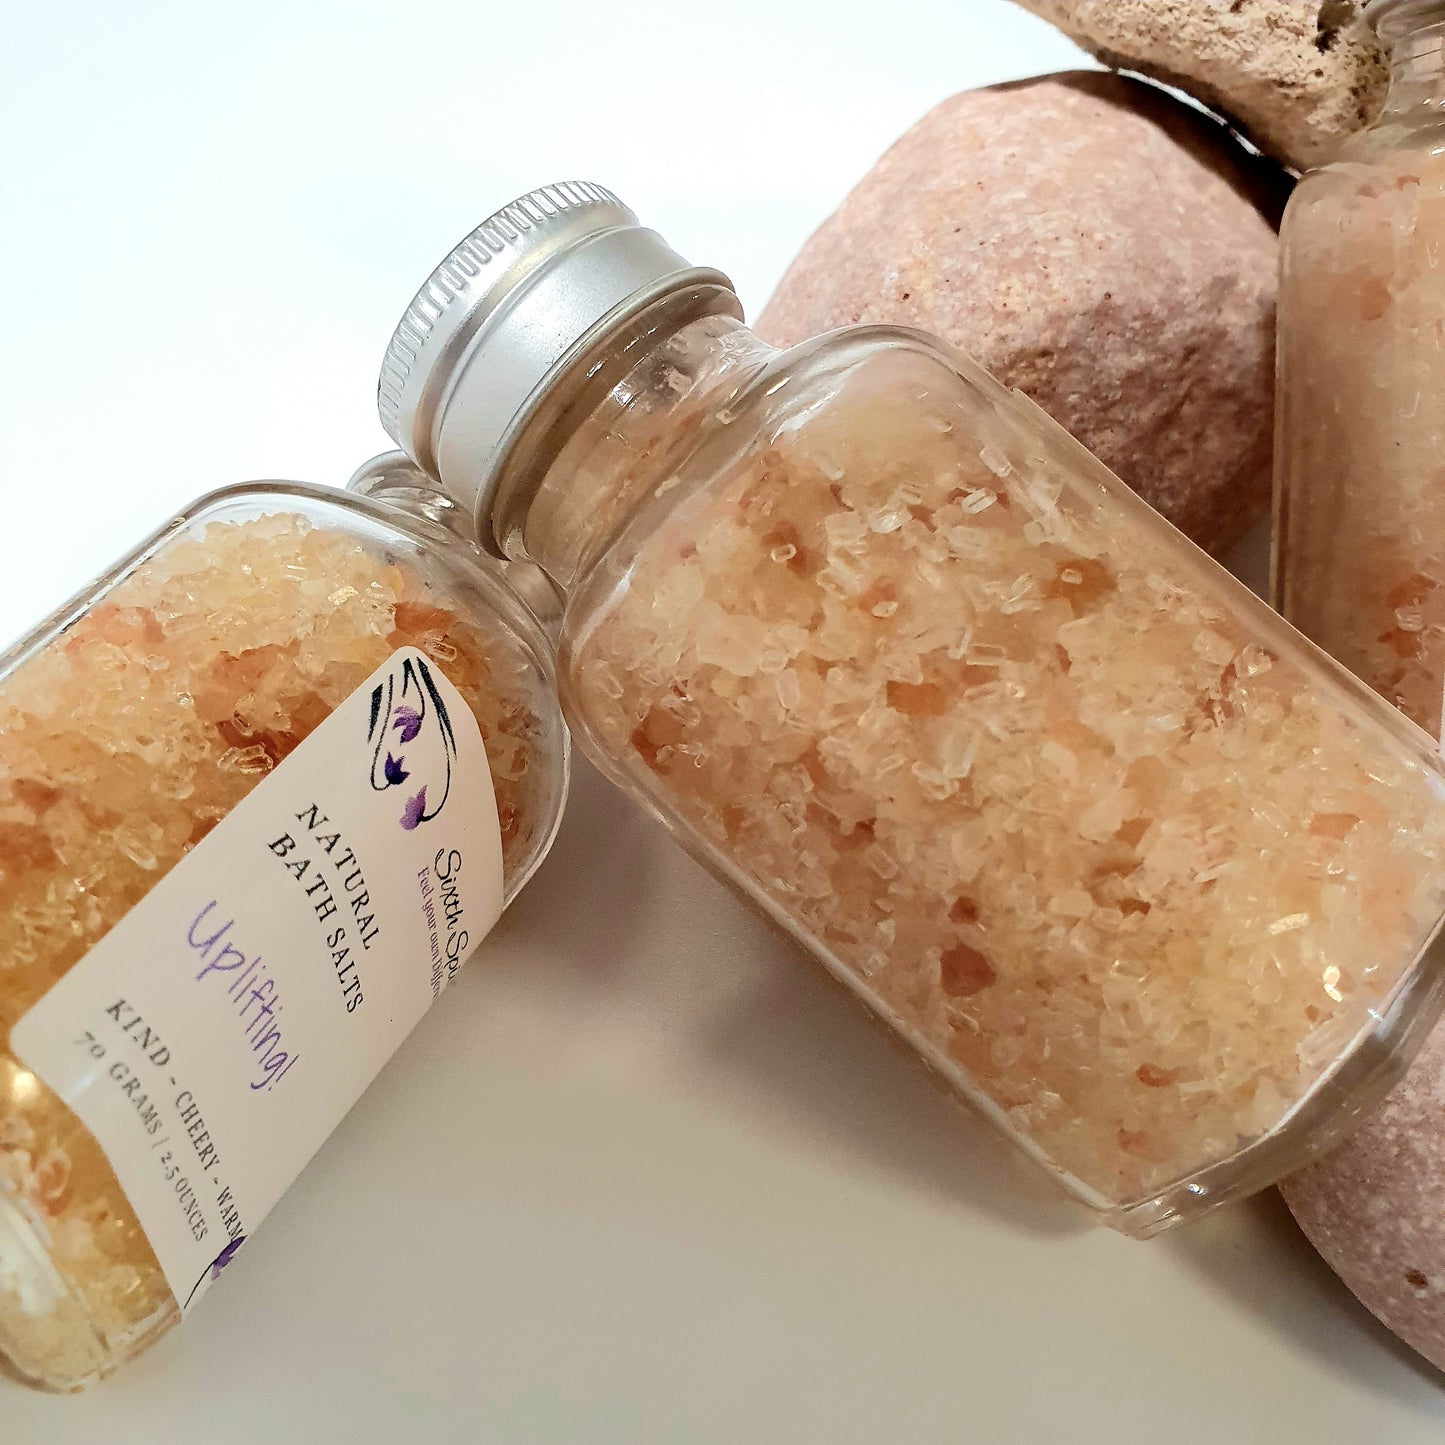 Natural herbal homemade bath salts in a jar